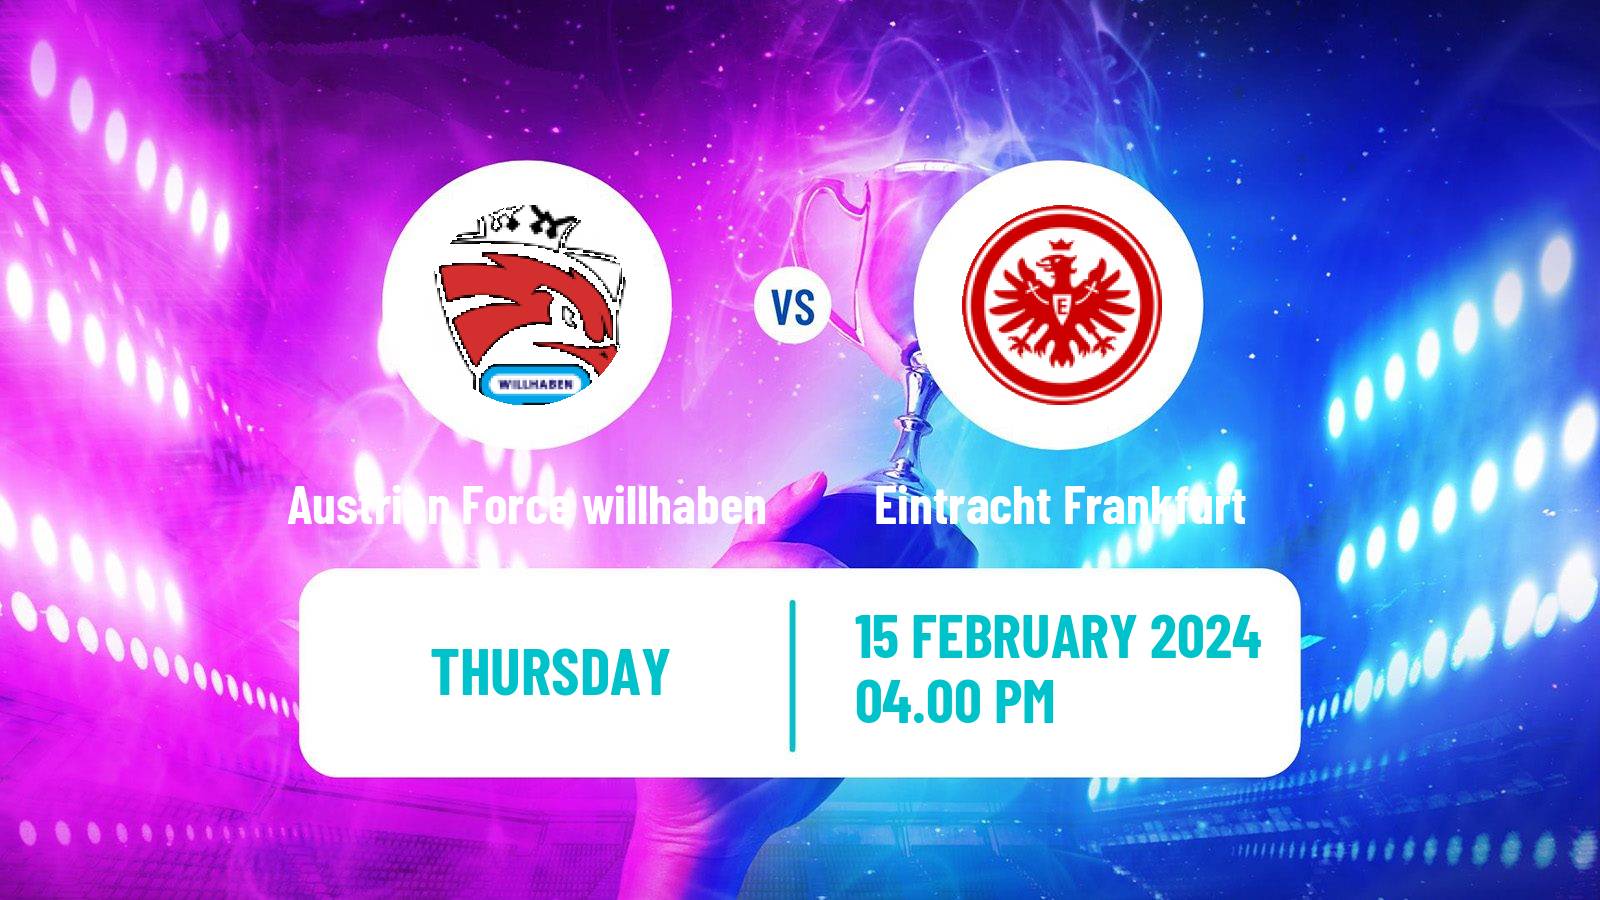 Esports League Of Legends Prime League Austrian Force willhaben - Eintracht Frankfurt